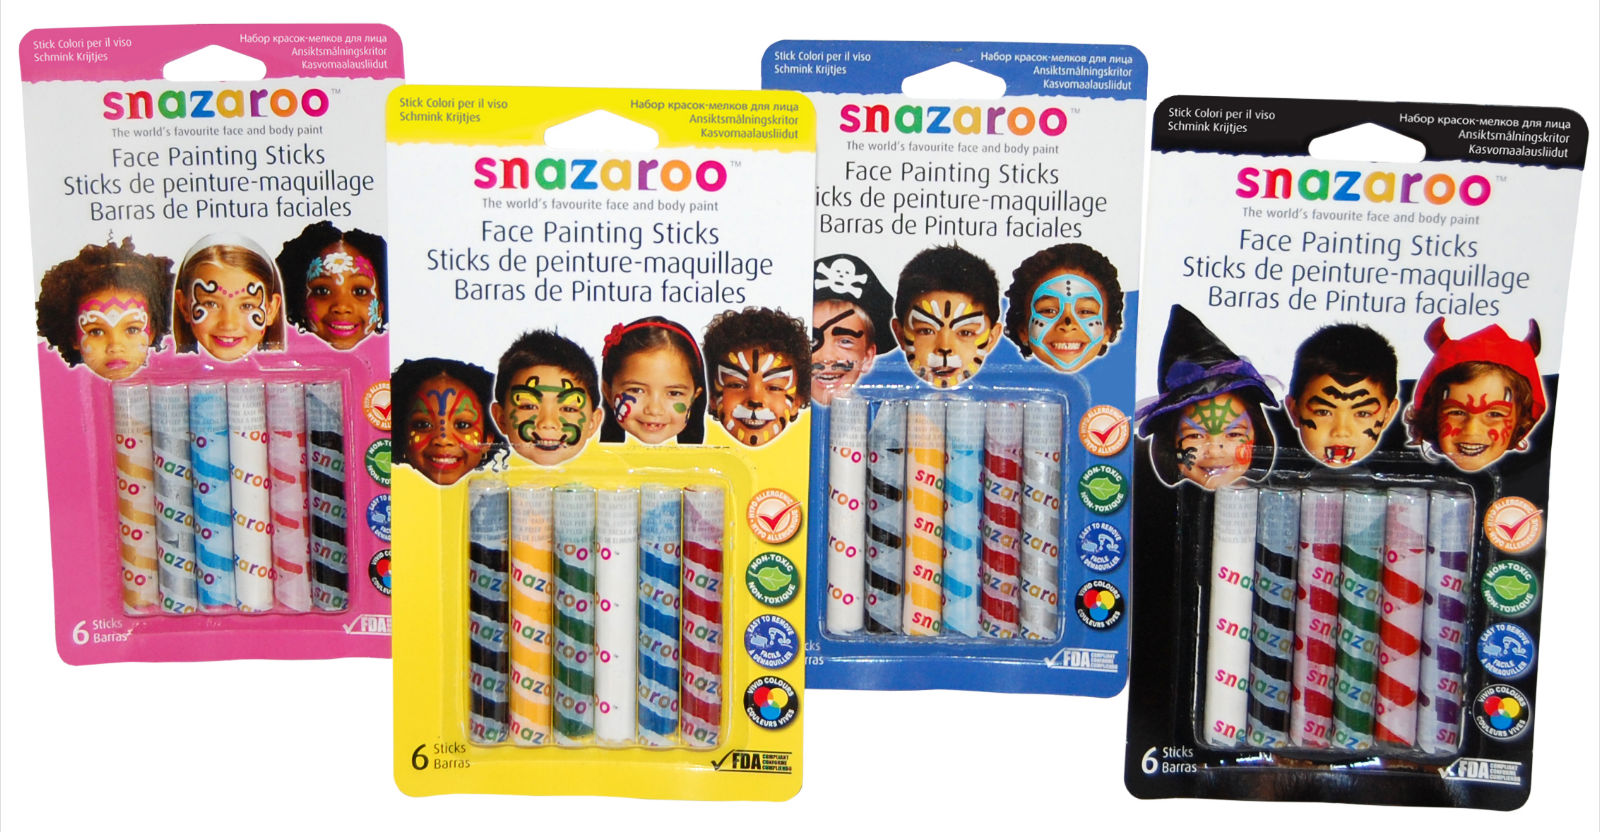 Snazaroo sticks